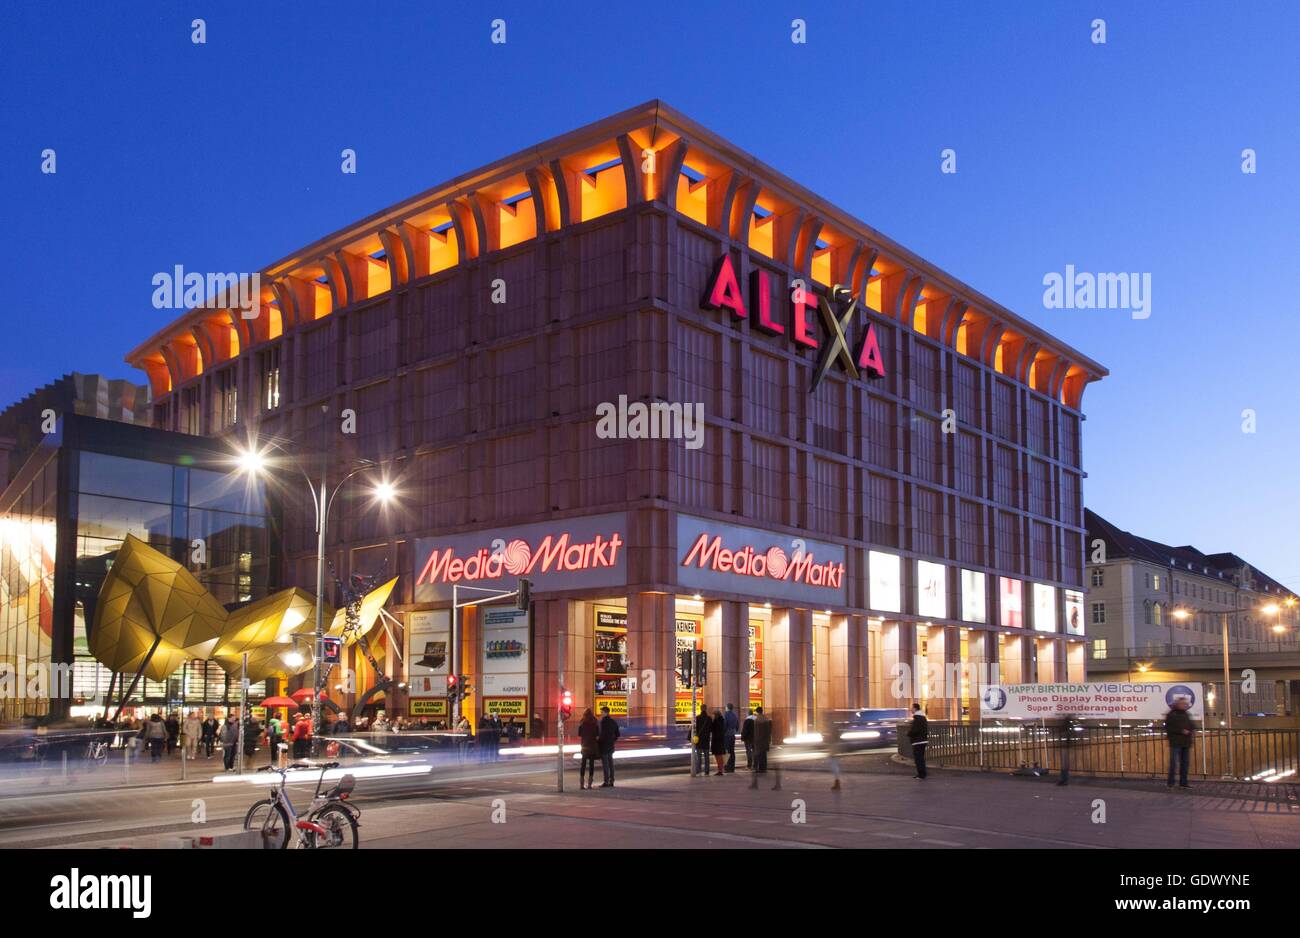 Media Markt in the Alexa shopping center Stock Photo - Alamy